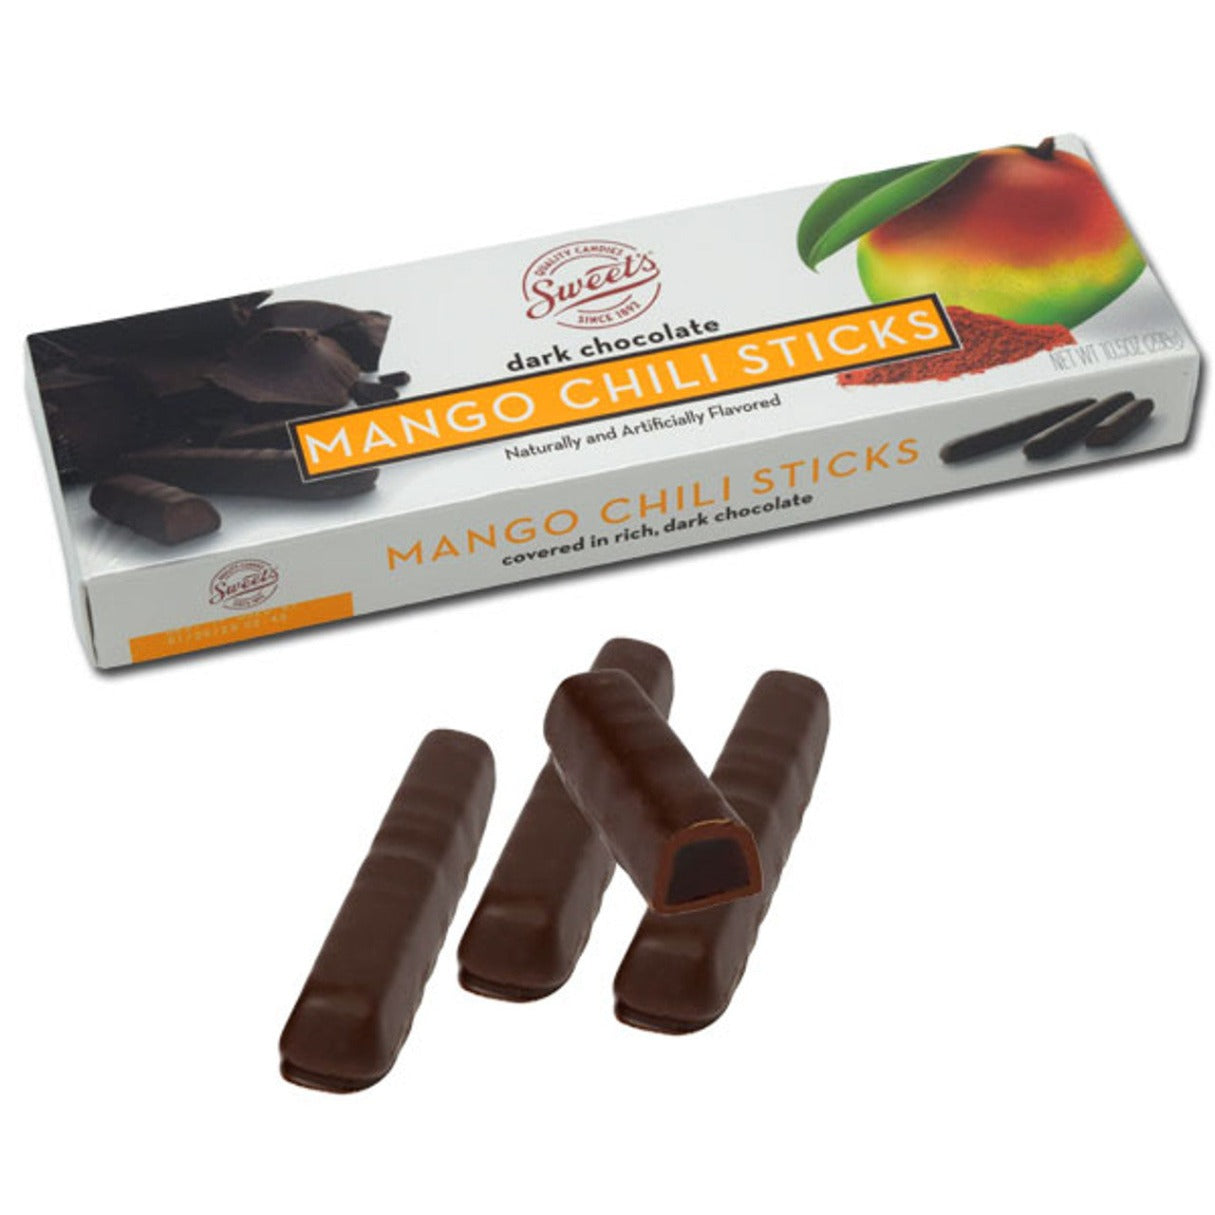 Dark Chocolate Sticks Mango Chili 10.5oz - 12ct